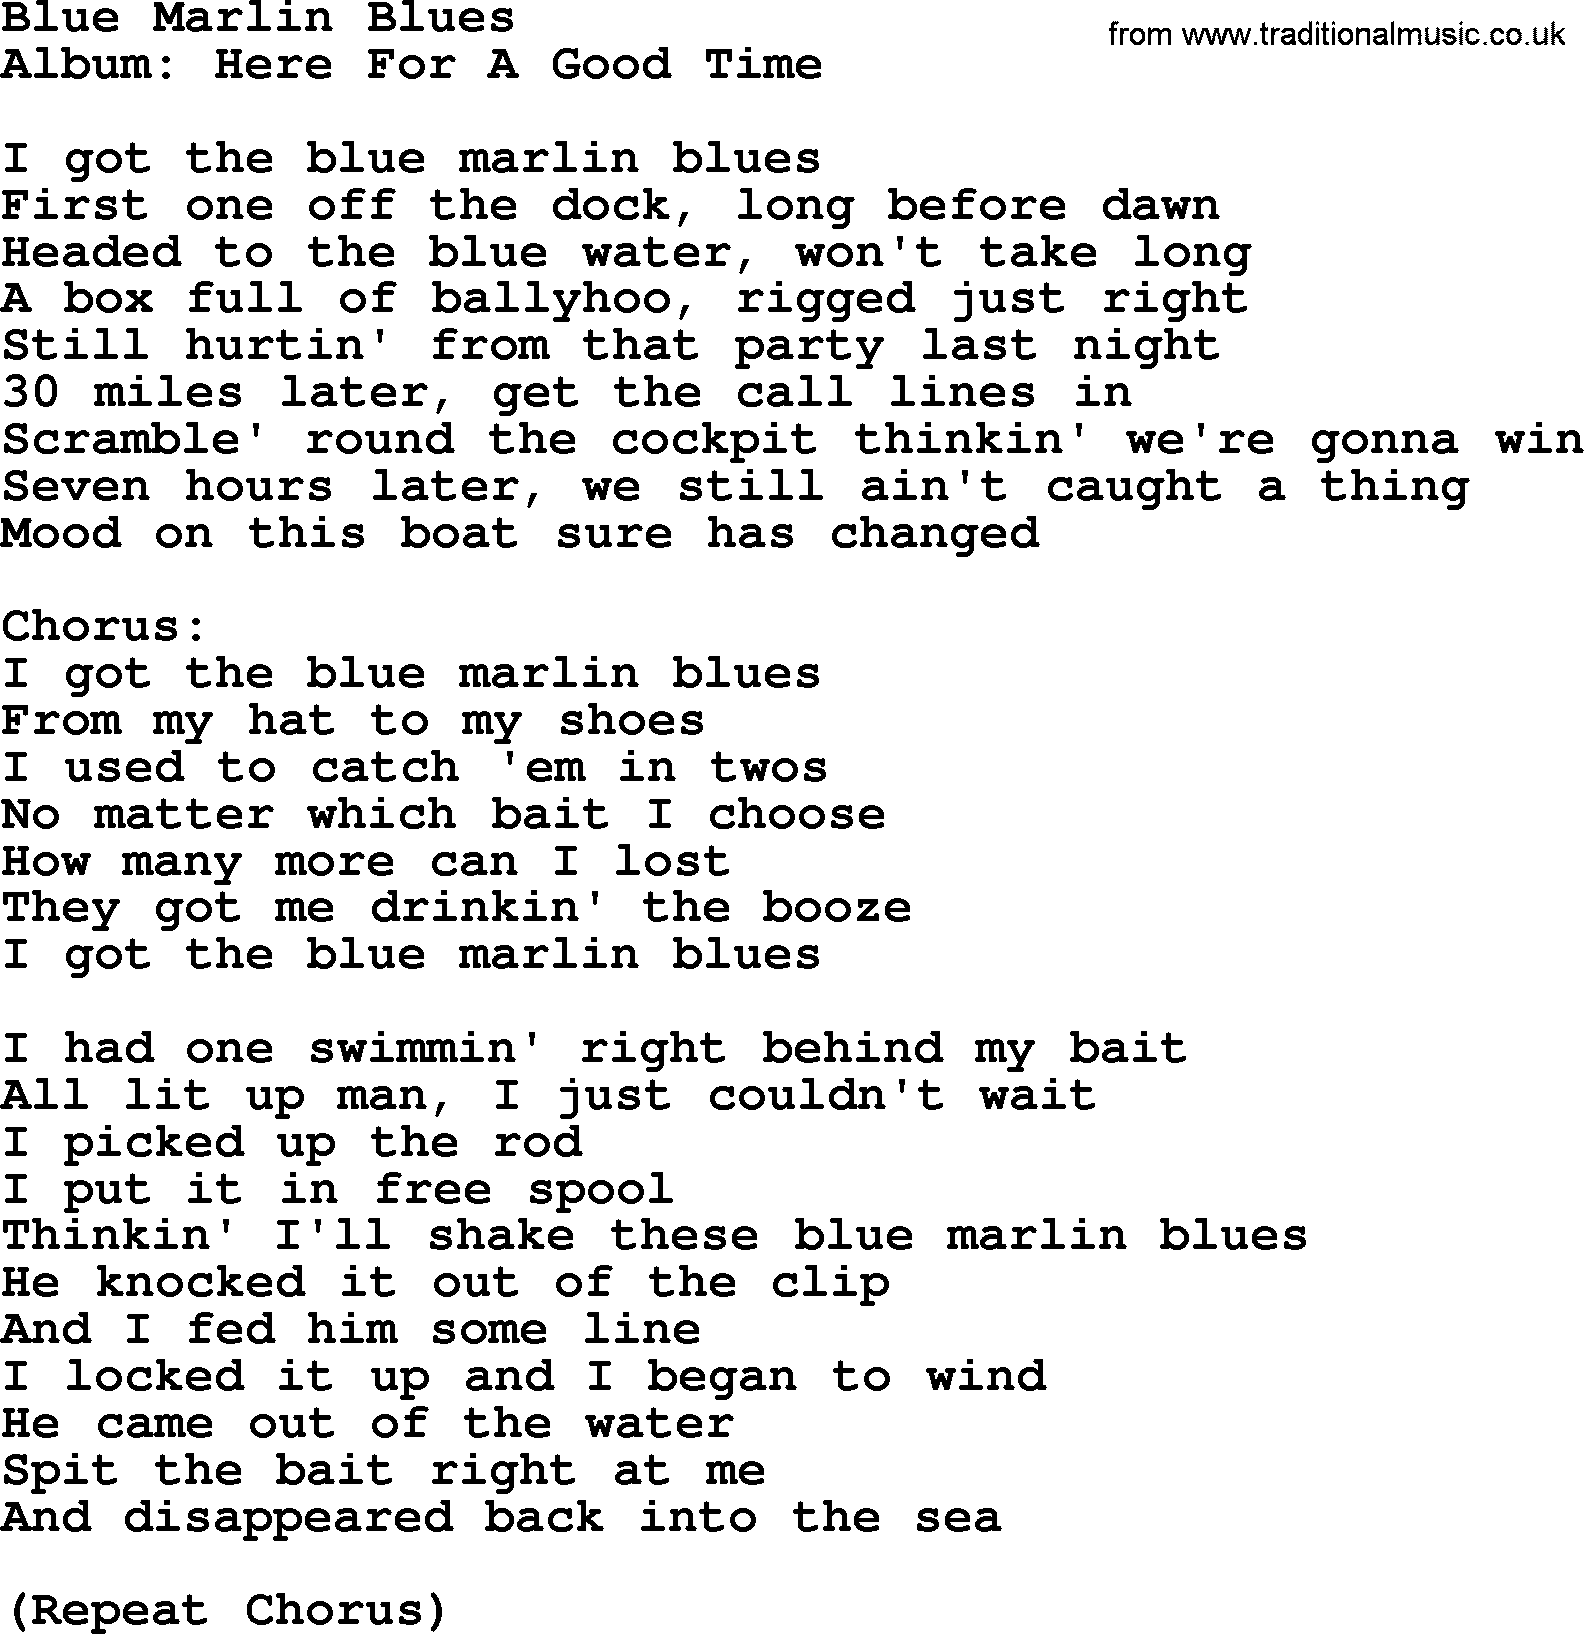 George Strait song: Blue Marlin Blues, lyrics